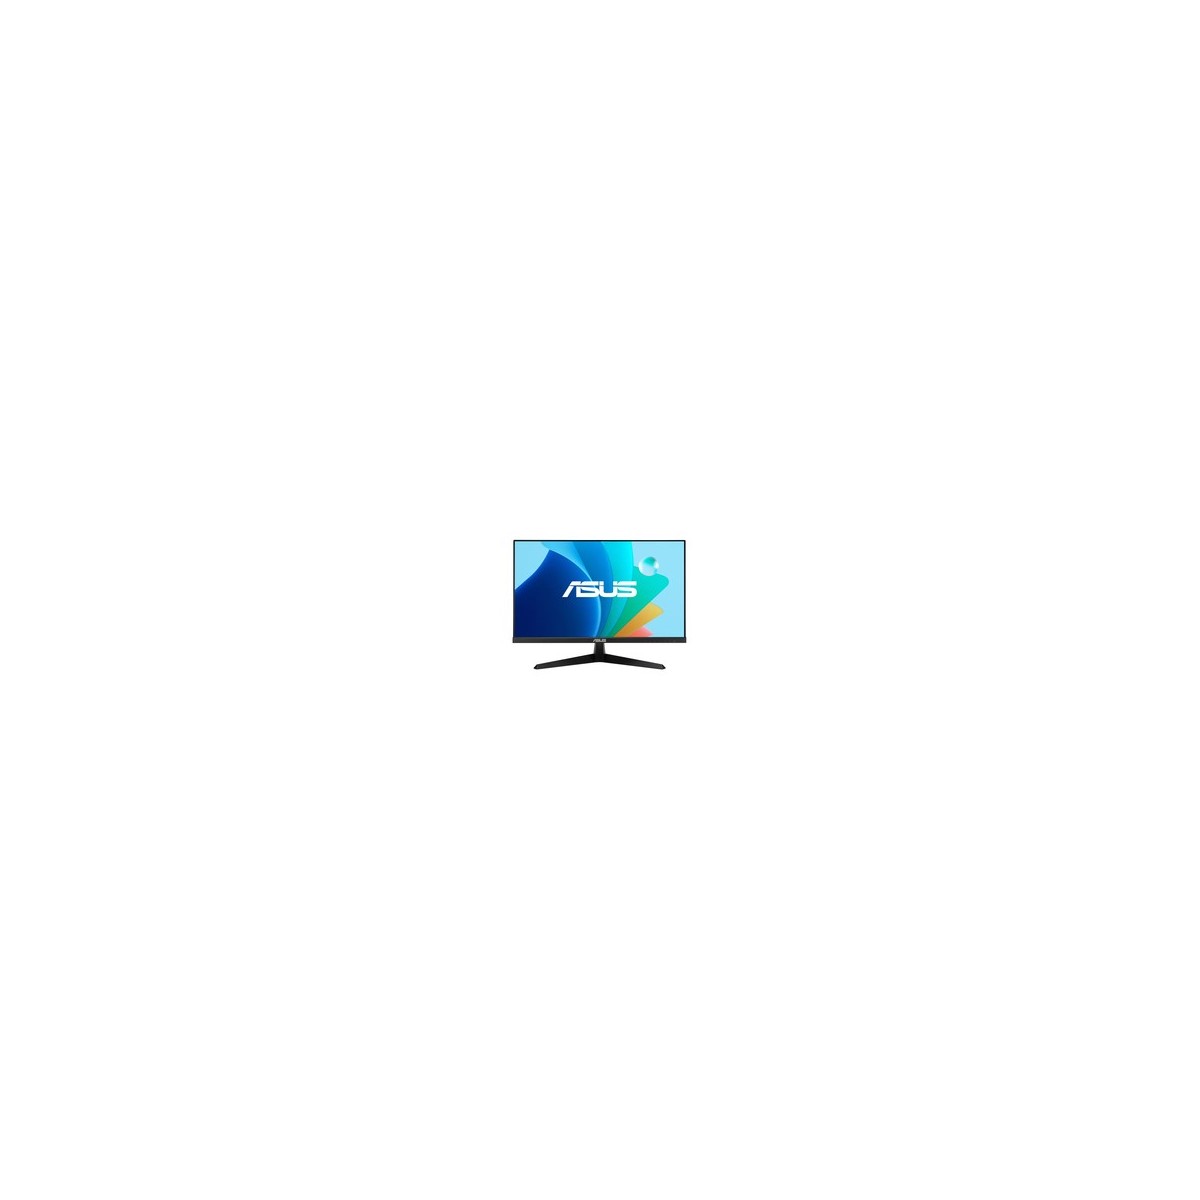 ASUS Eye Care VY249HF 60.45cm 16 9 FHD HDMI - Flat Screen - 60.45 cm